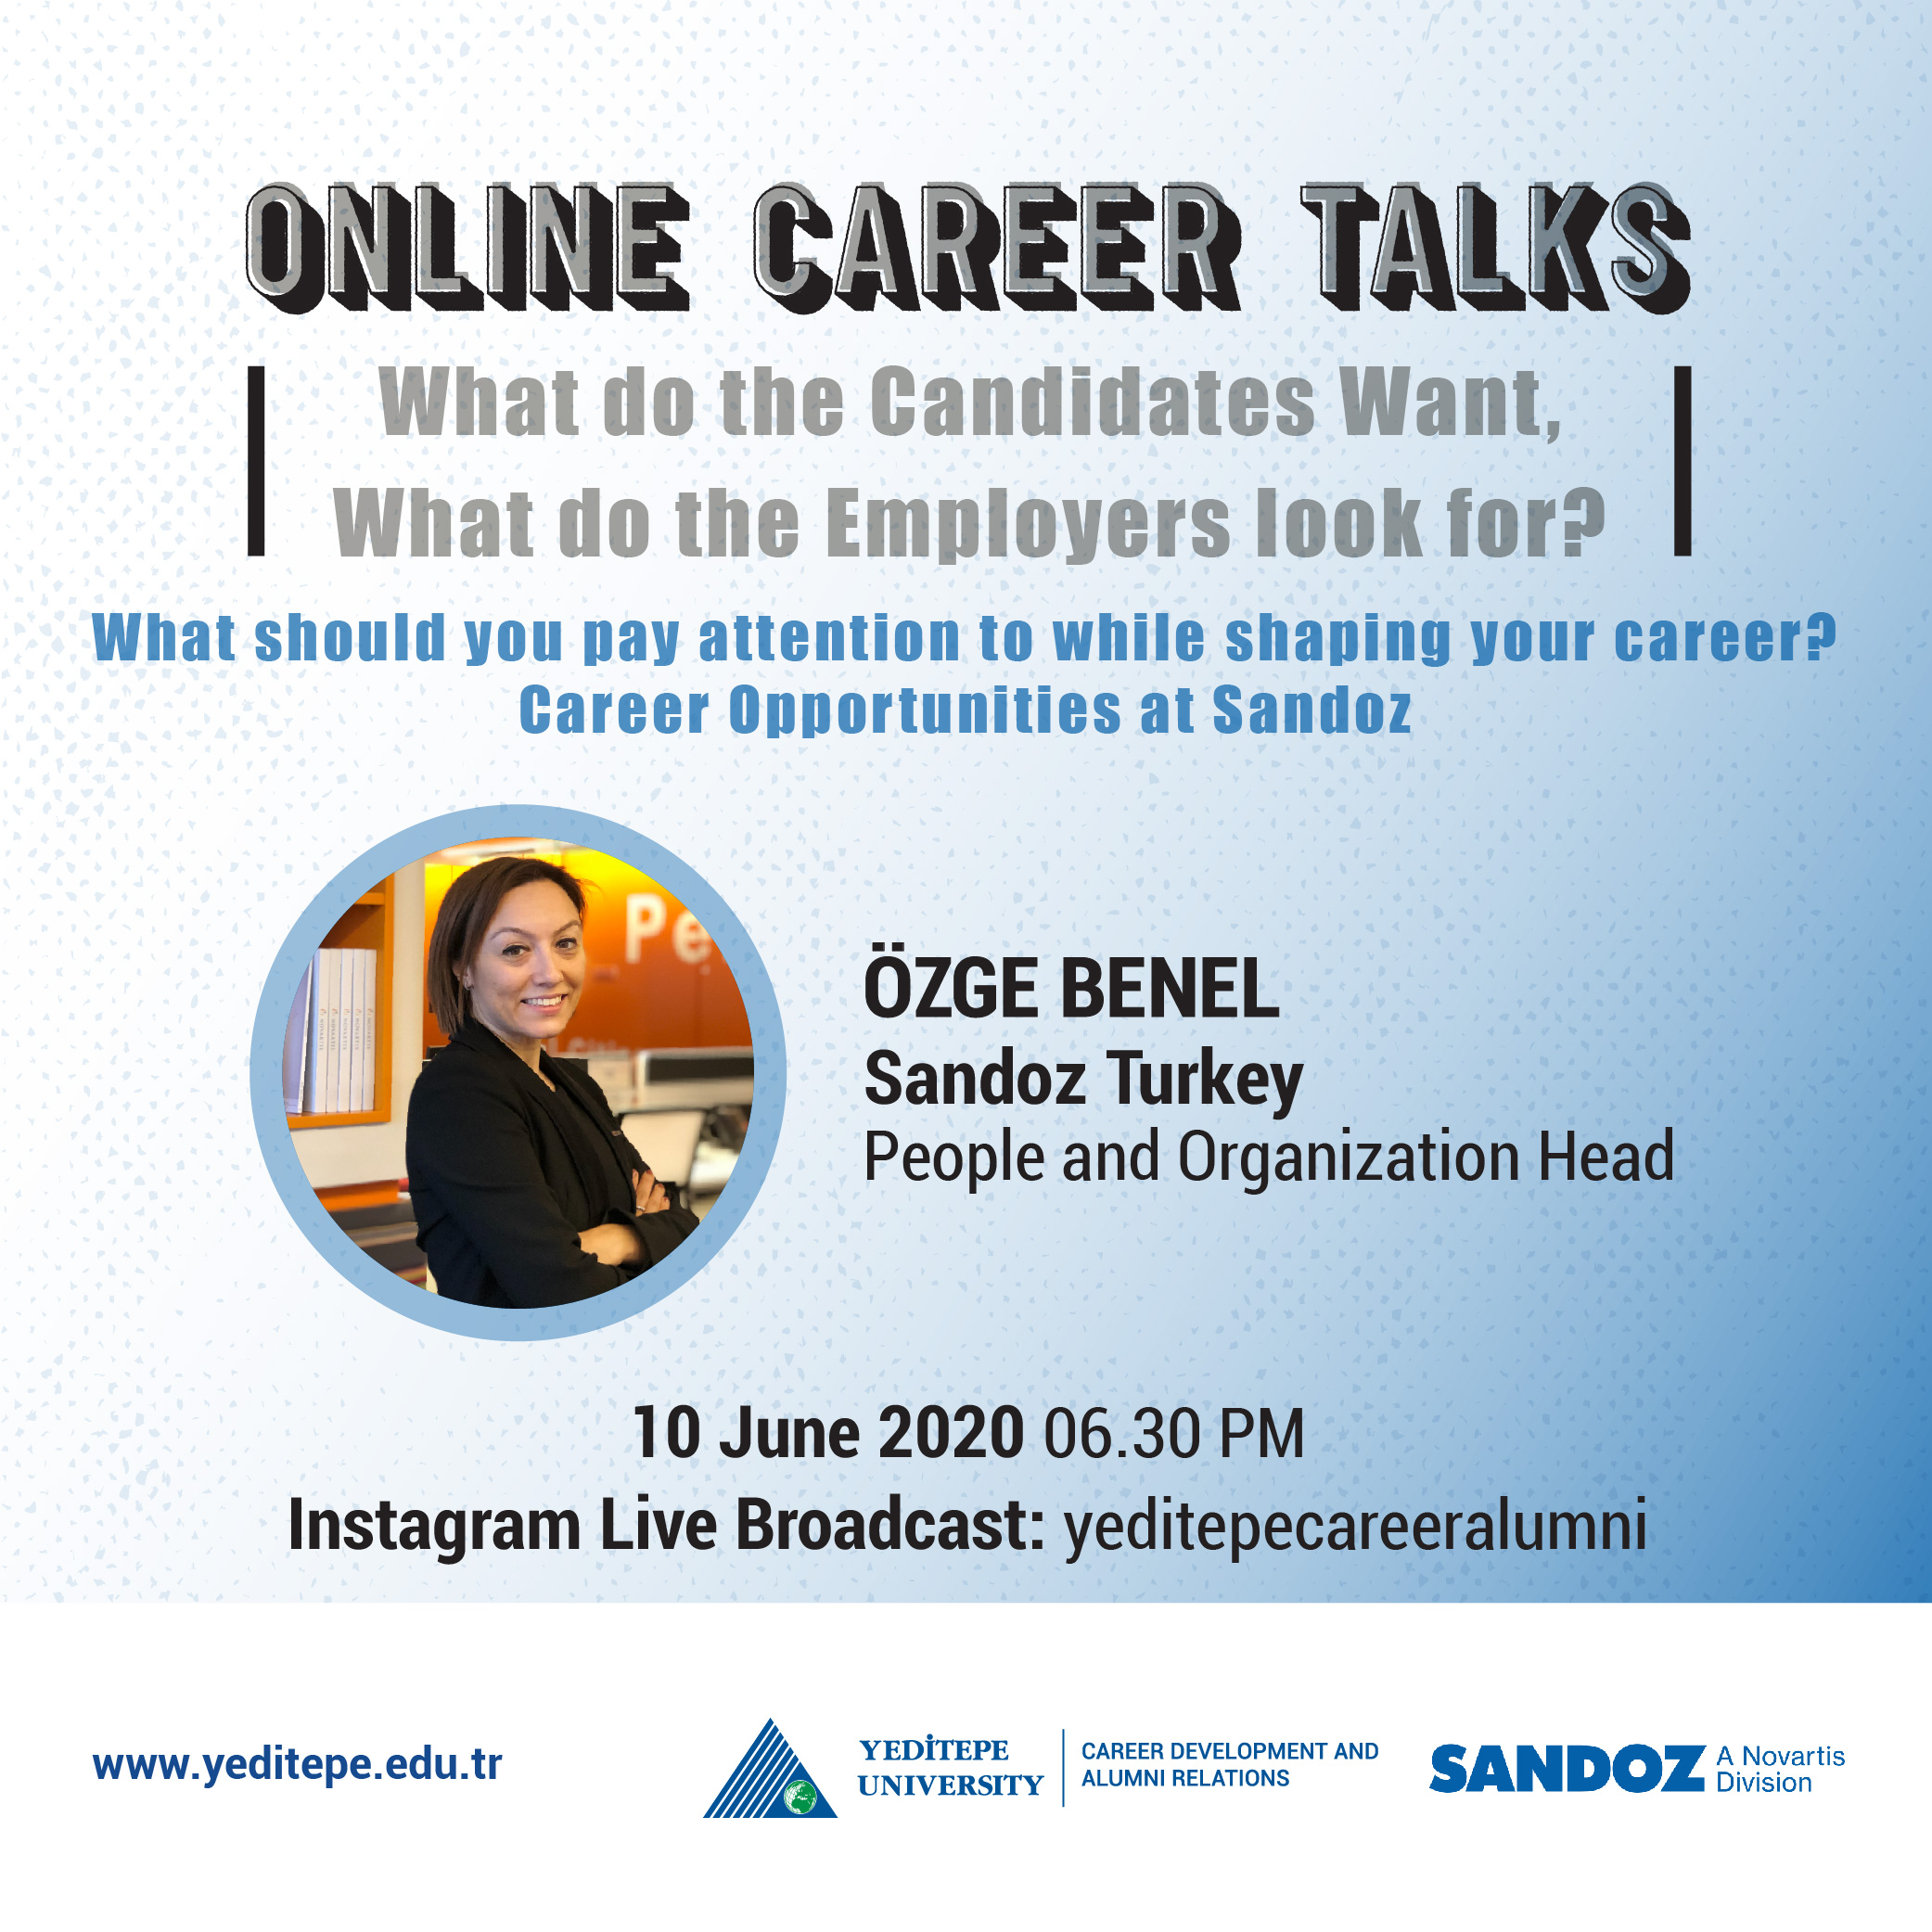 Online Career Talks - Career Opportunities at Sandoz